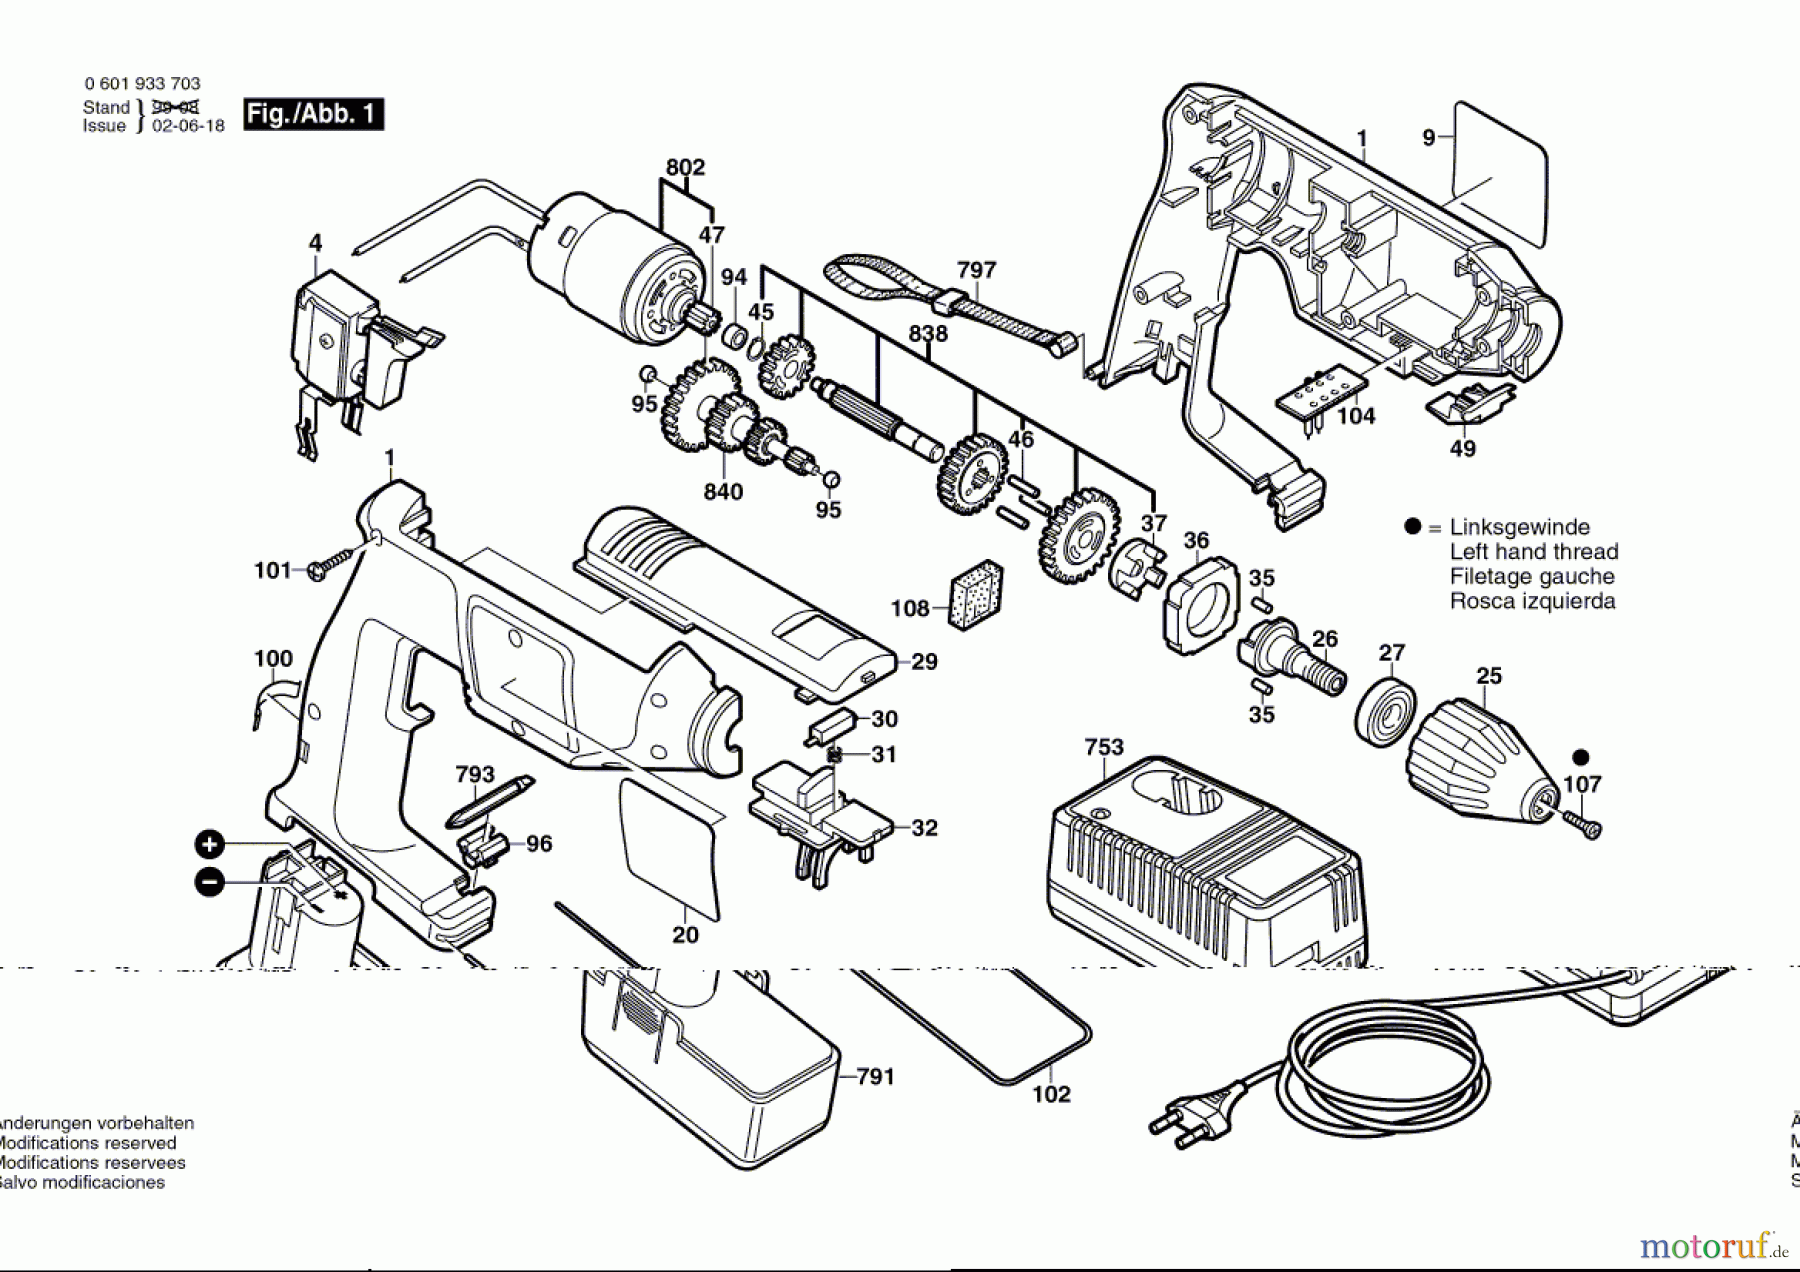  Bosch Akku Werkzeug Gw-Akku-Bohrmaschine GBM 9,6 VES-3 Seite 1